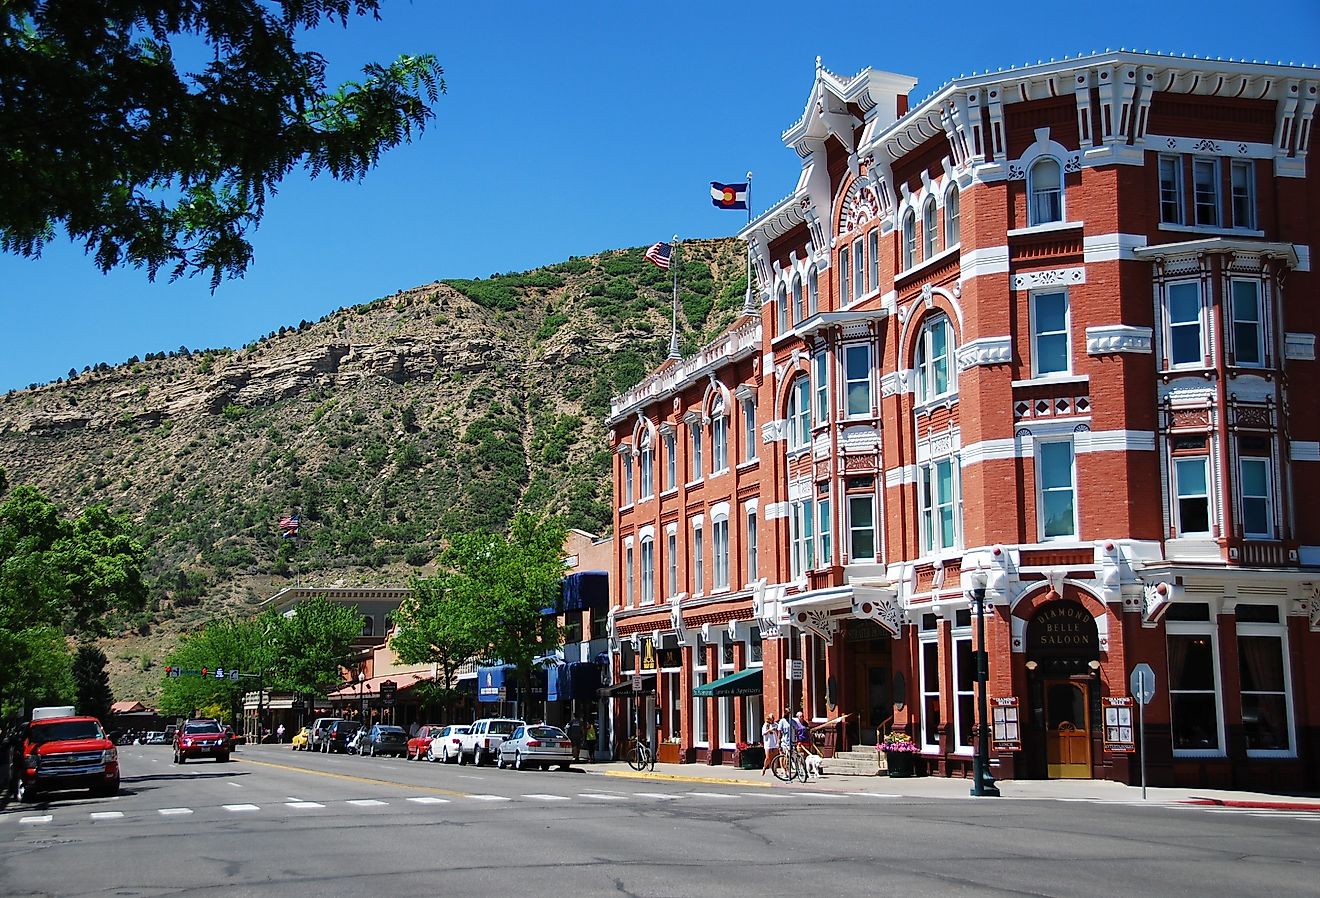 Main Avenue in Durango, Colorado. Image credit WorldPictures via Shutterstock